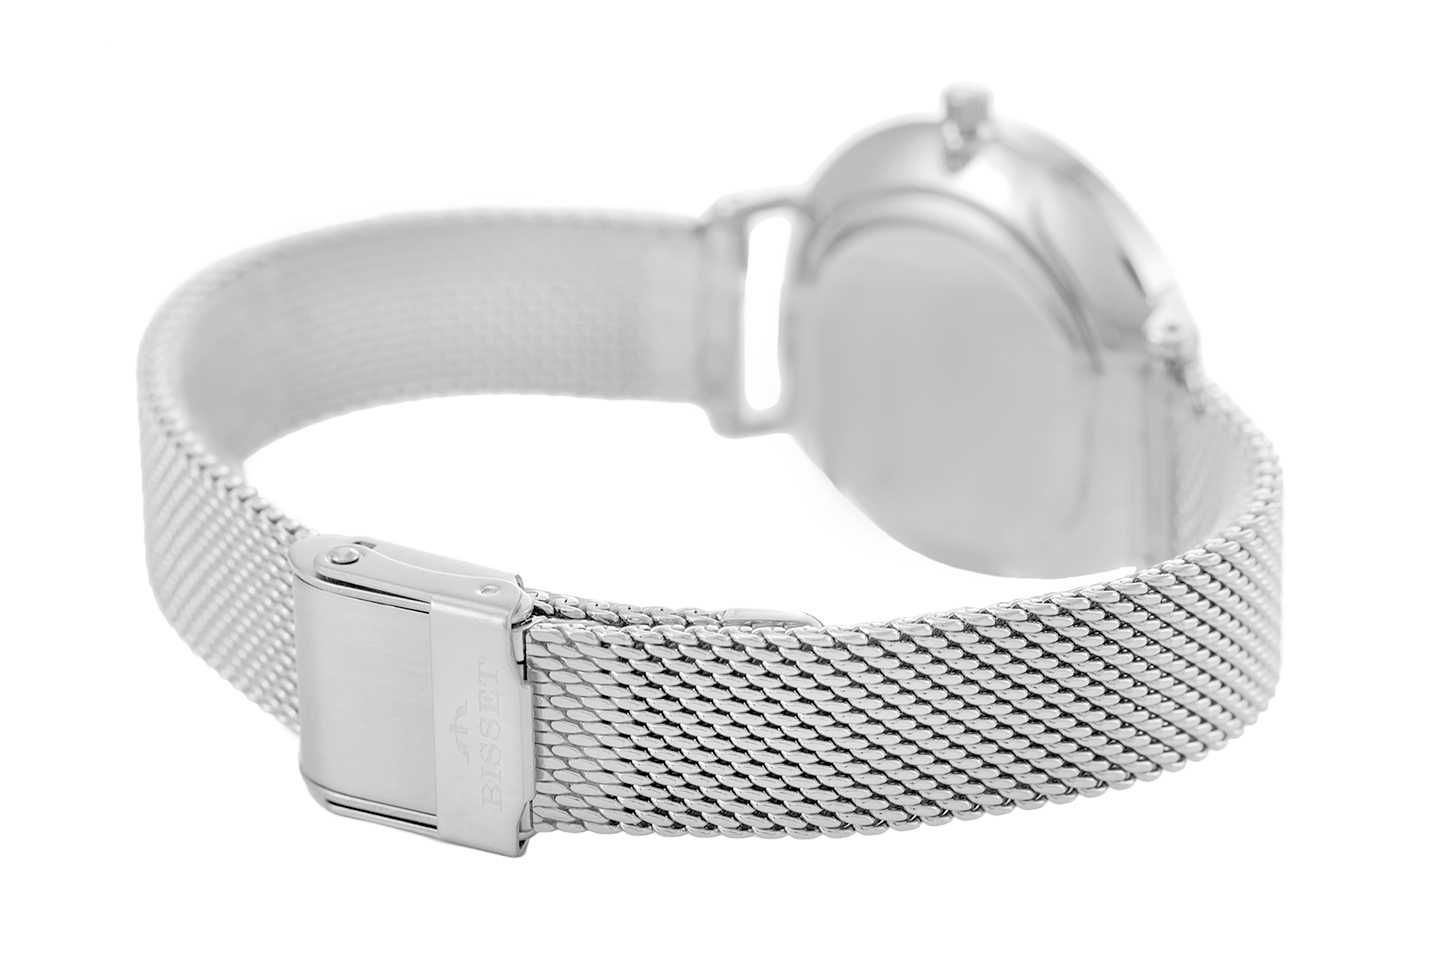 NOWY: Zegarek Bisset damski BSBF30 srebrny/biała porcelana